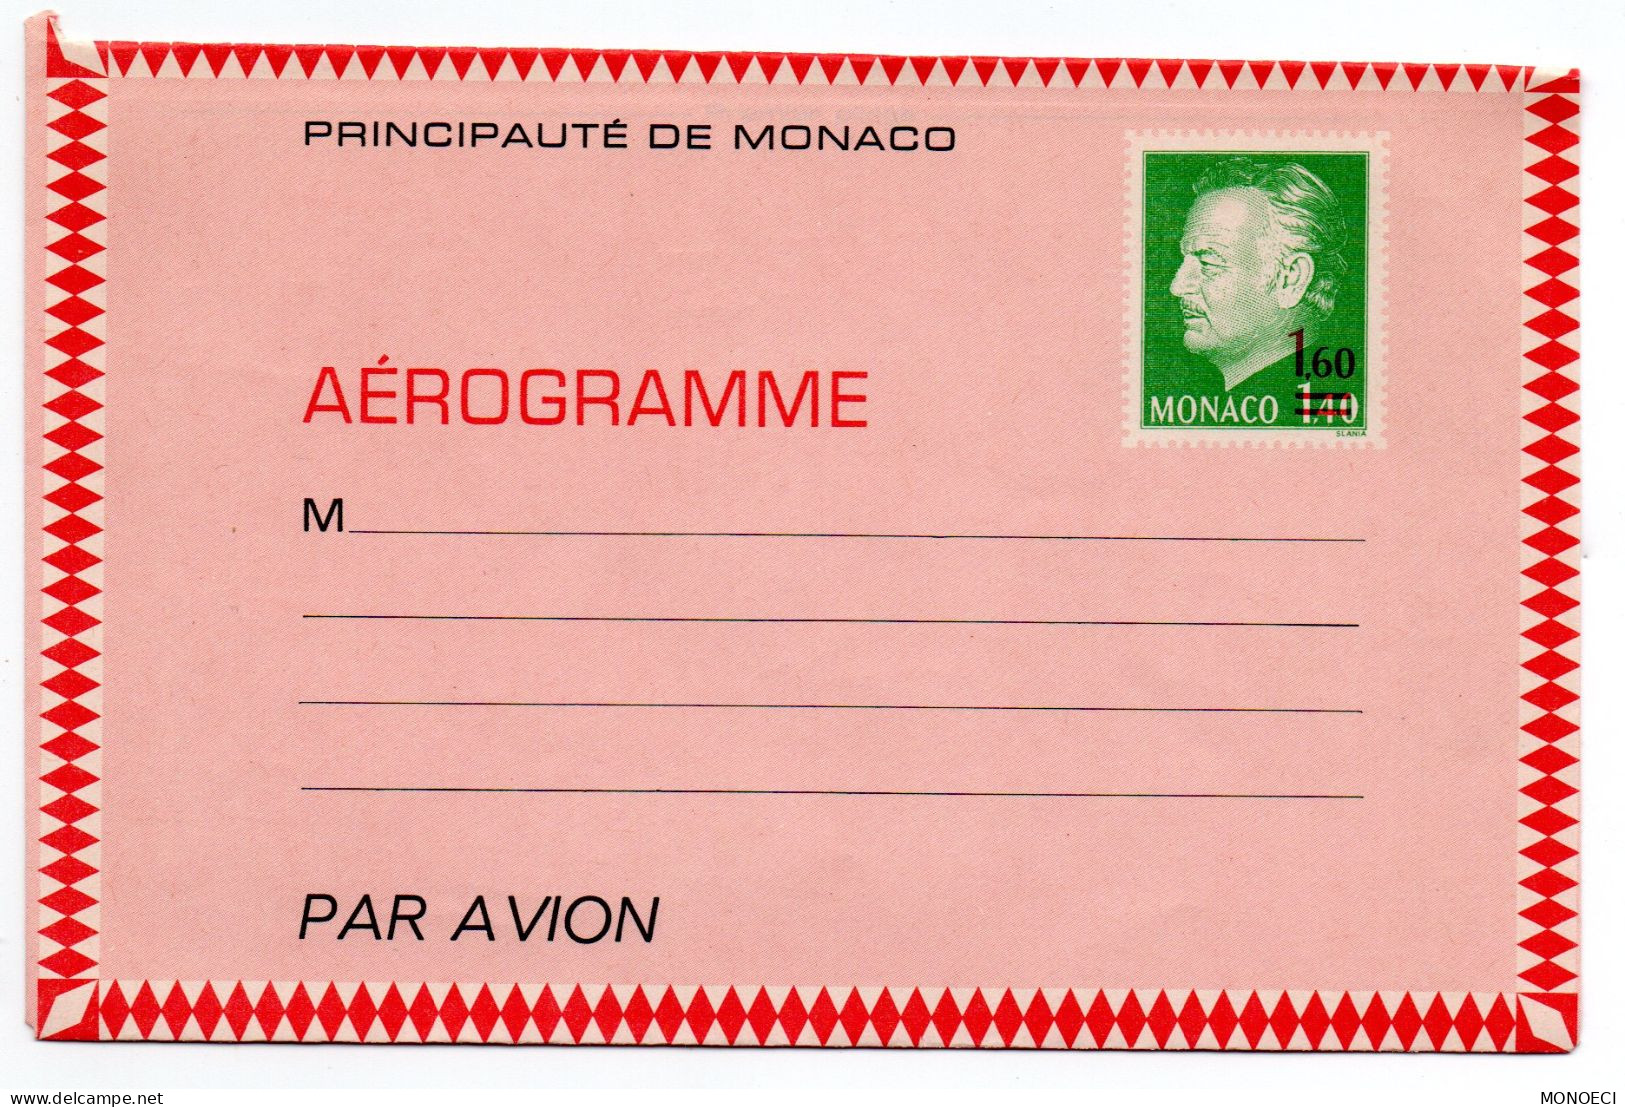 MONACO -- MONTE CARLO -- Monégasque -- Entier Postal -- Aérogramme -- Prince Rainier III 1F40 Surchargé 1F60 (1976) - Postal Stationery